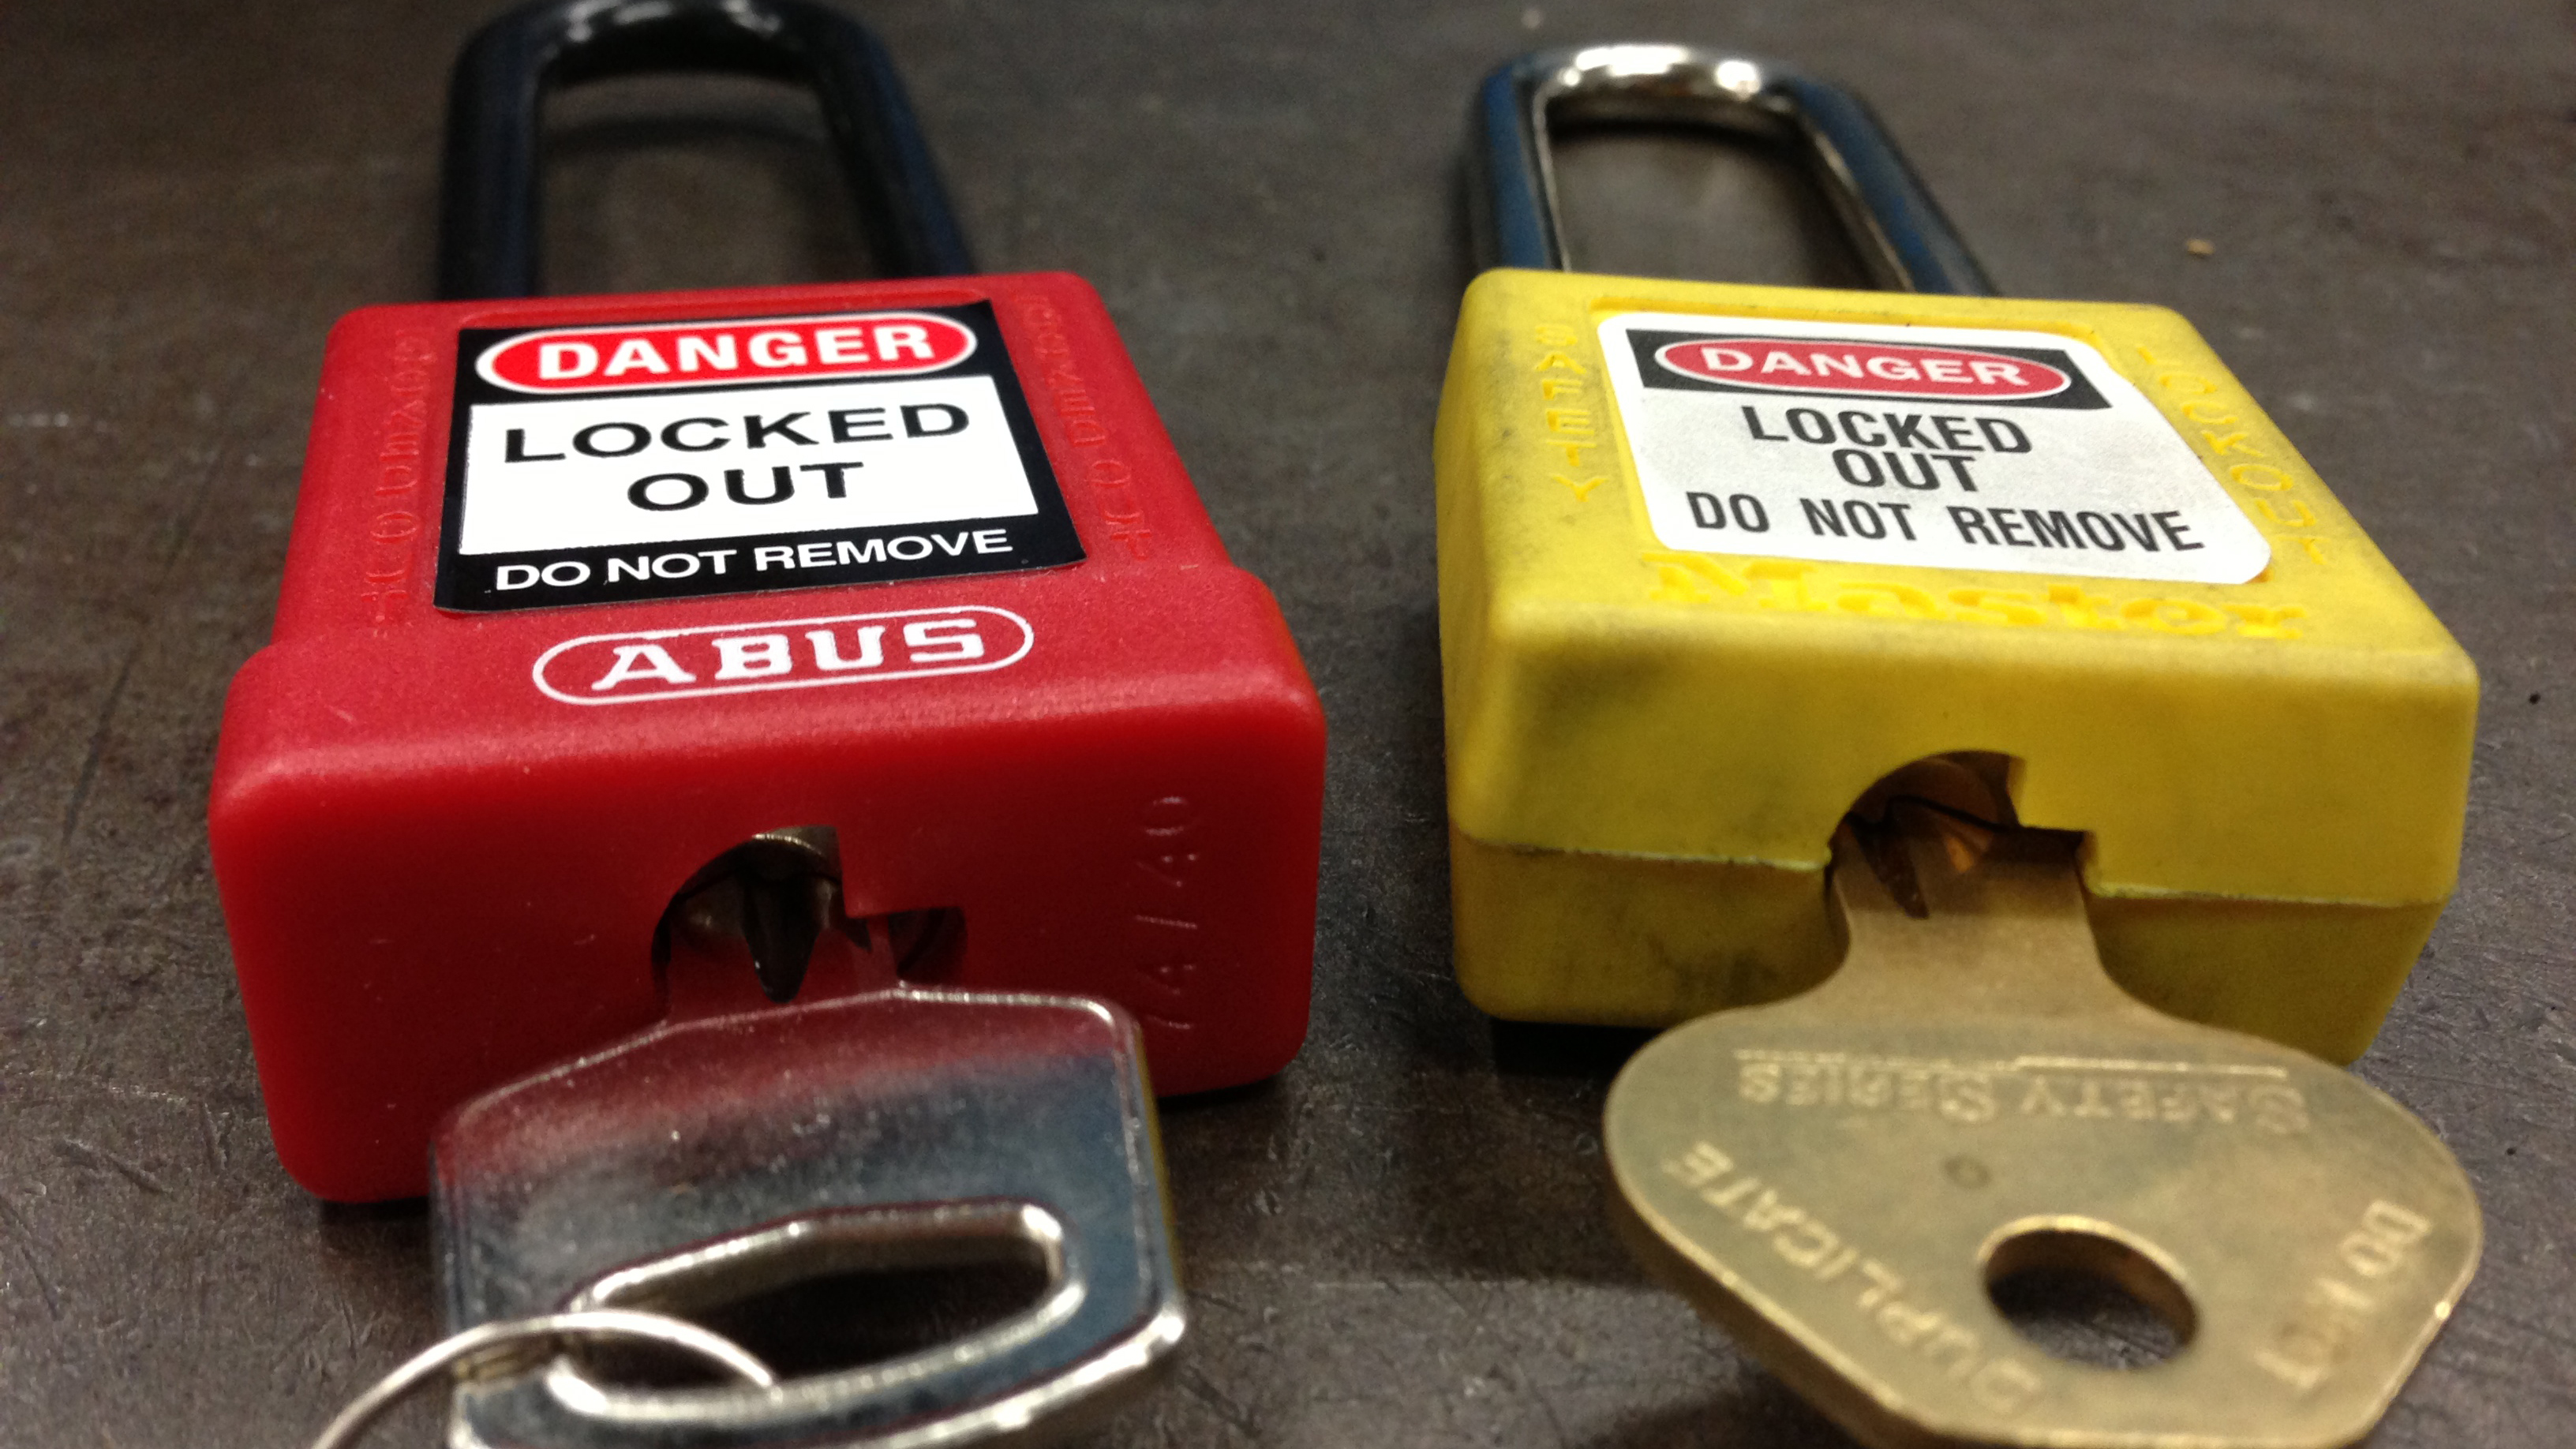 Locks: Types, Design, Metals Used, and Choosing Locks